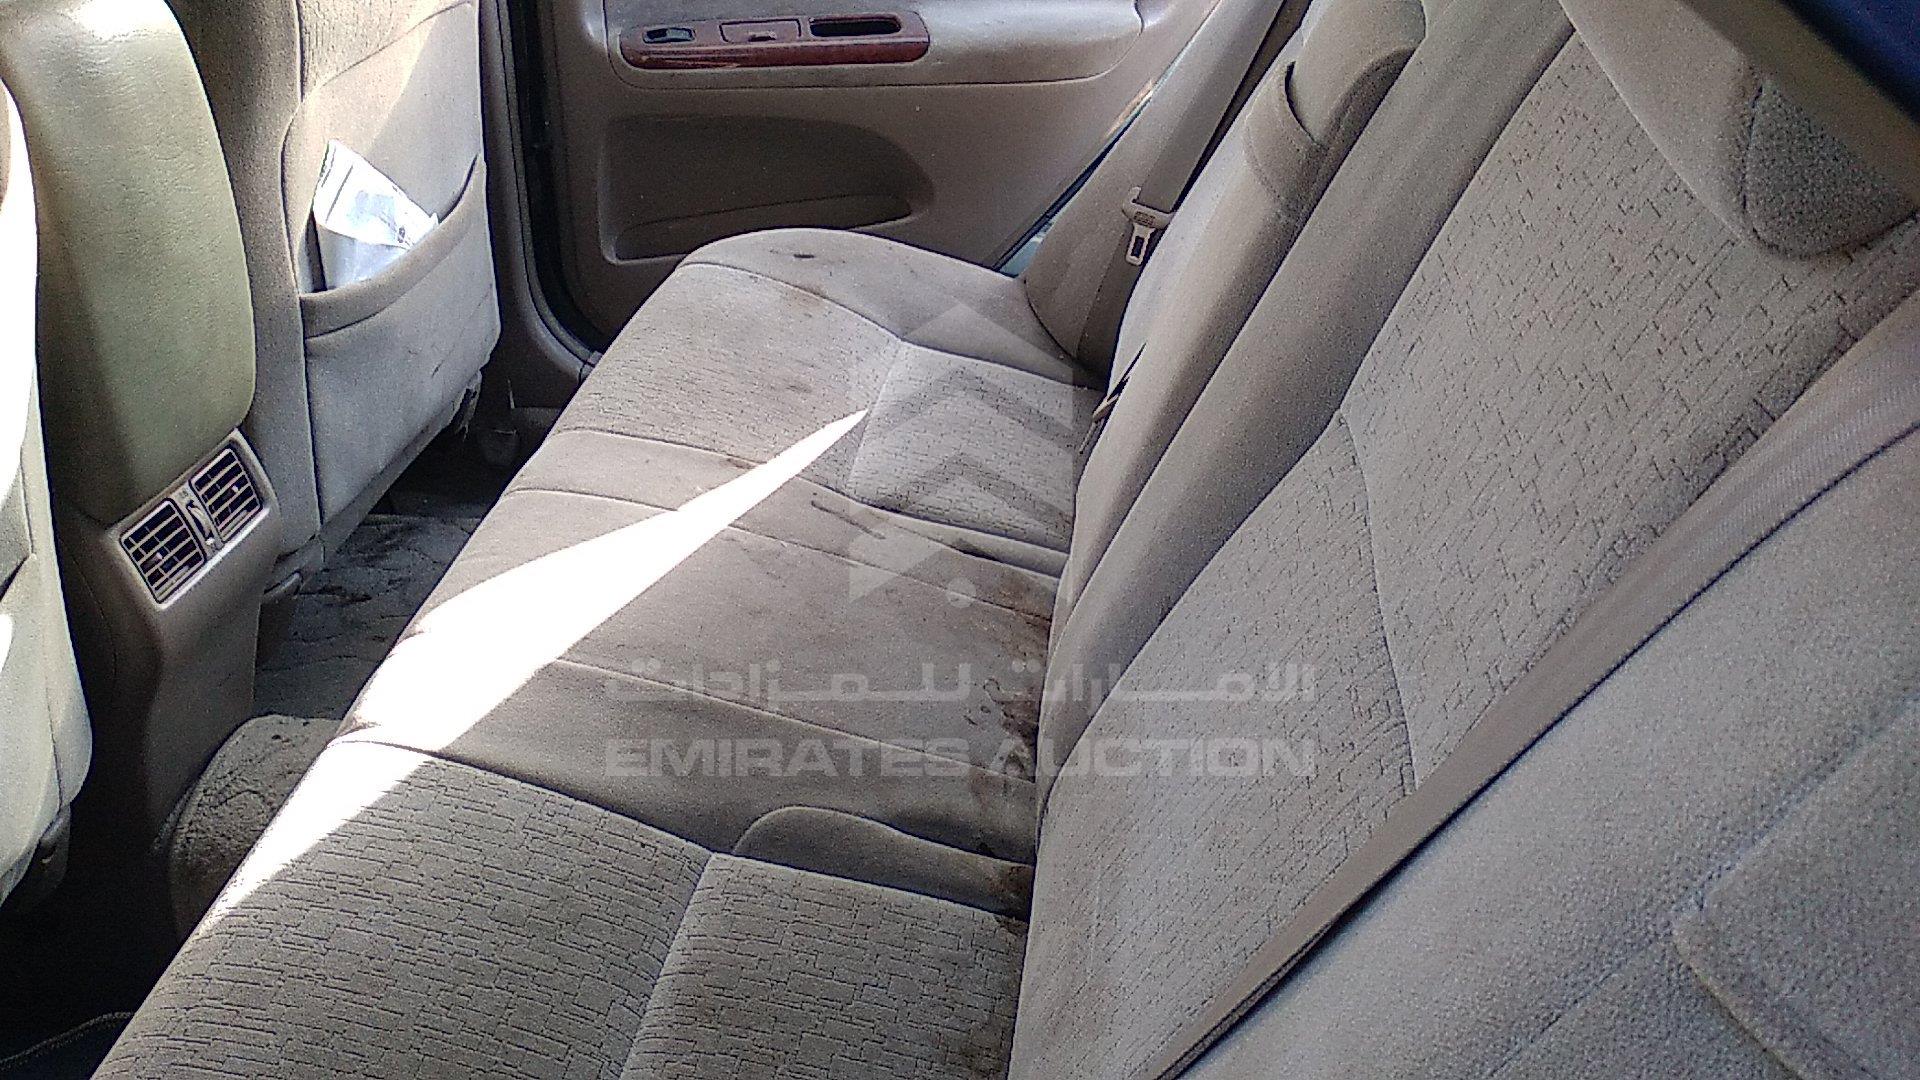 image 2 4 - Camry Auction 2000 to 2015_ price 5000 dirhams